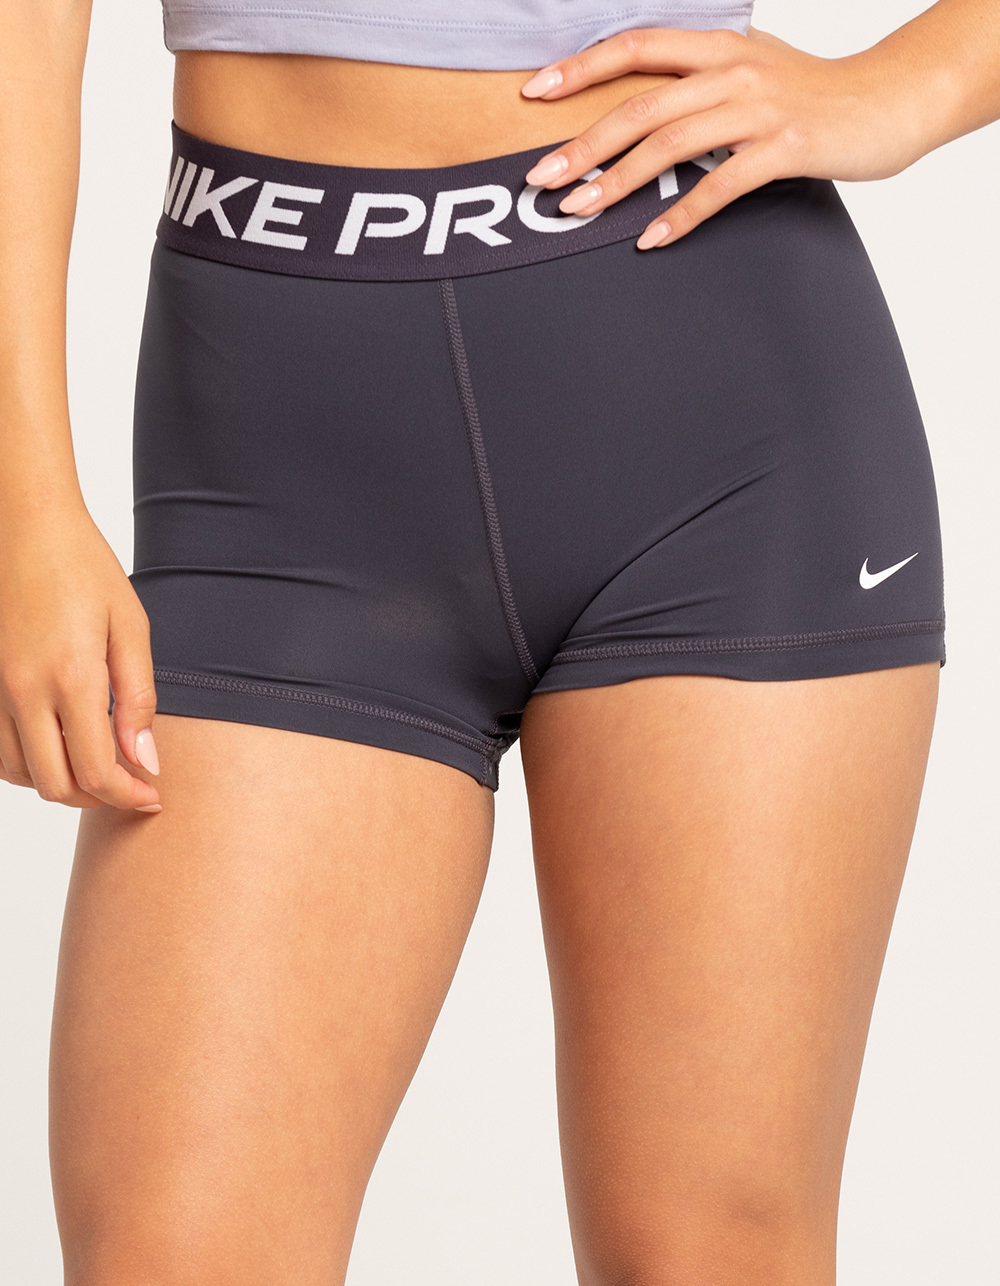 Nike Pro Combat 3 Compression Shorts (X-Small) 